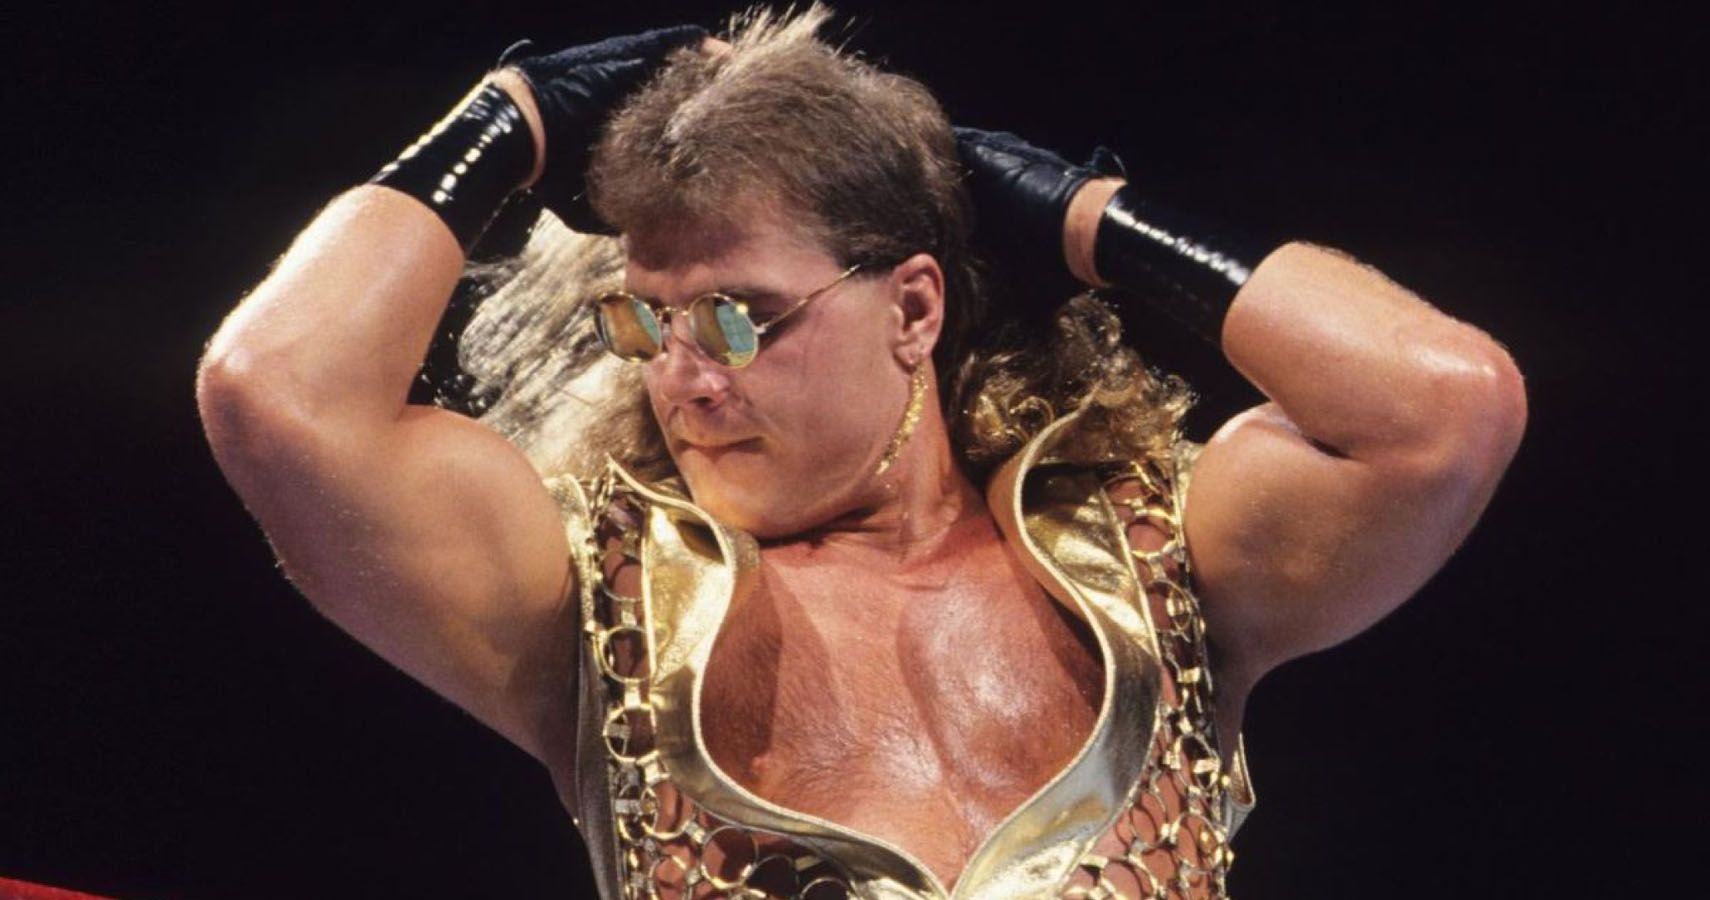 Top 10 AWA stars who made it big in WWE, ranked